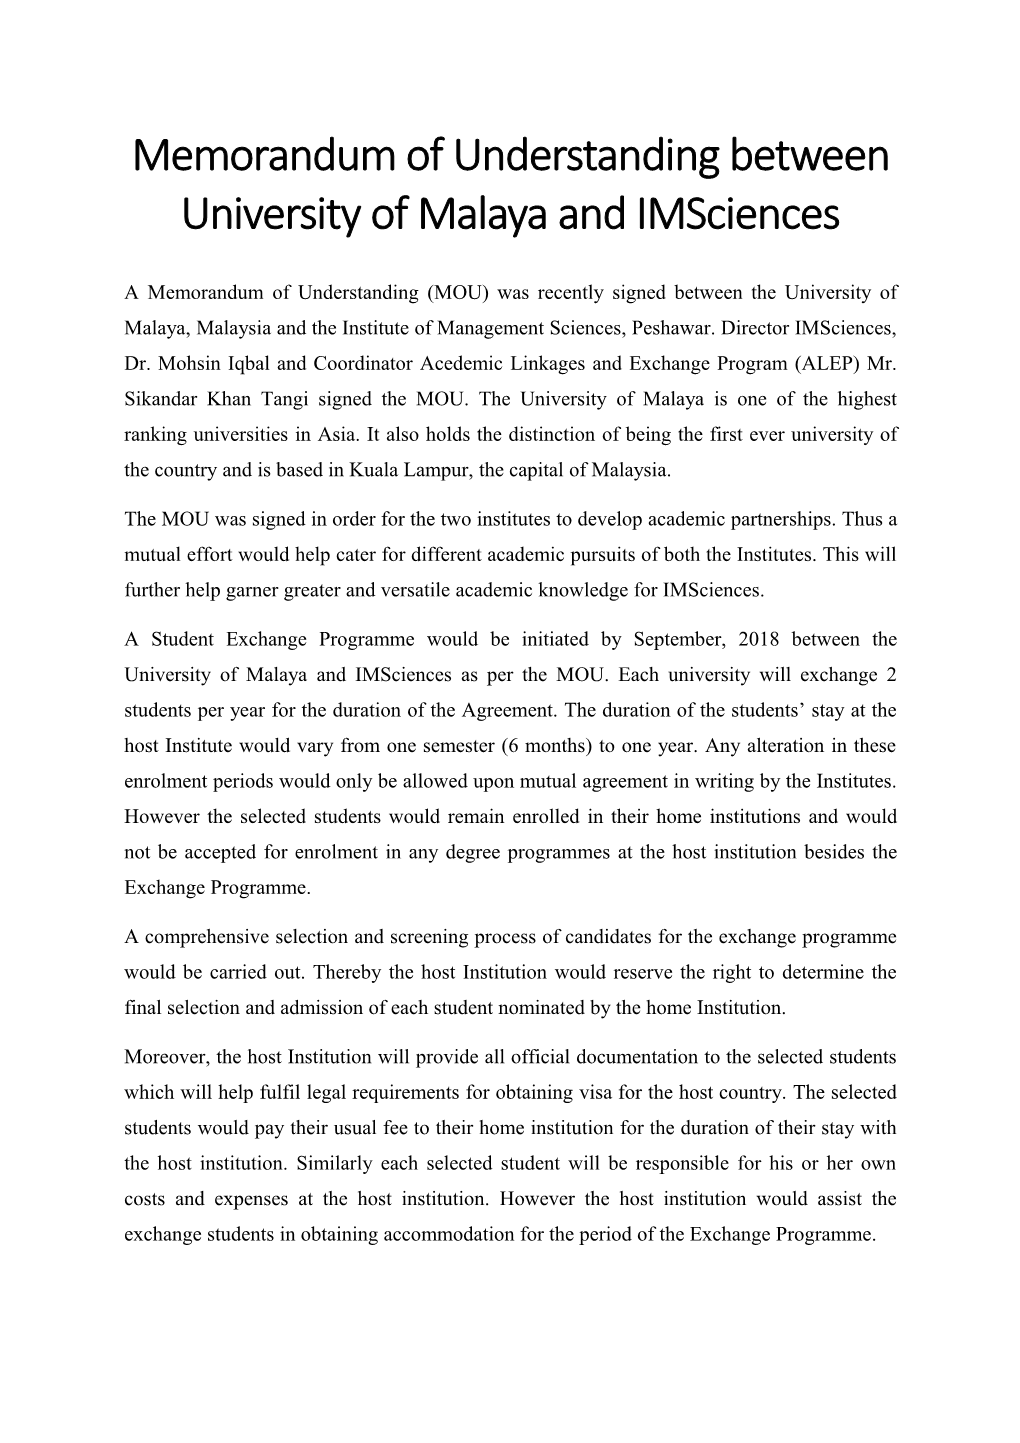 Memorandum of Understanding Between University of Malaya and Imsciences